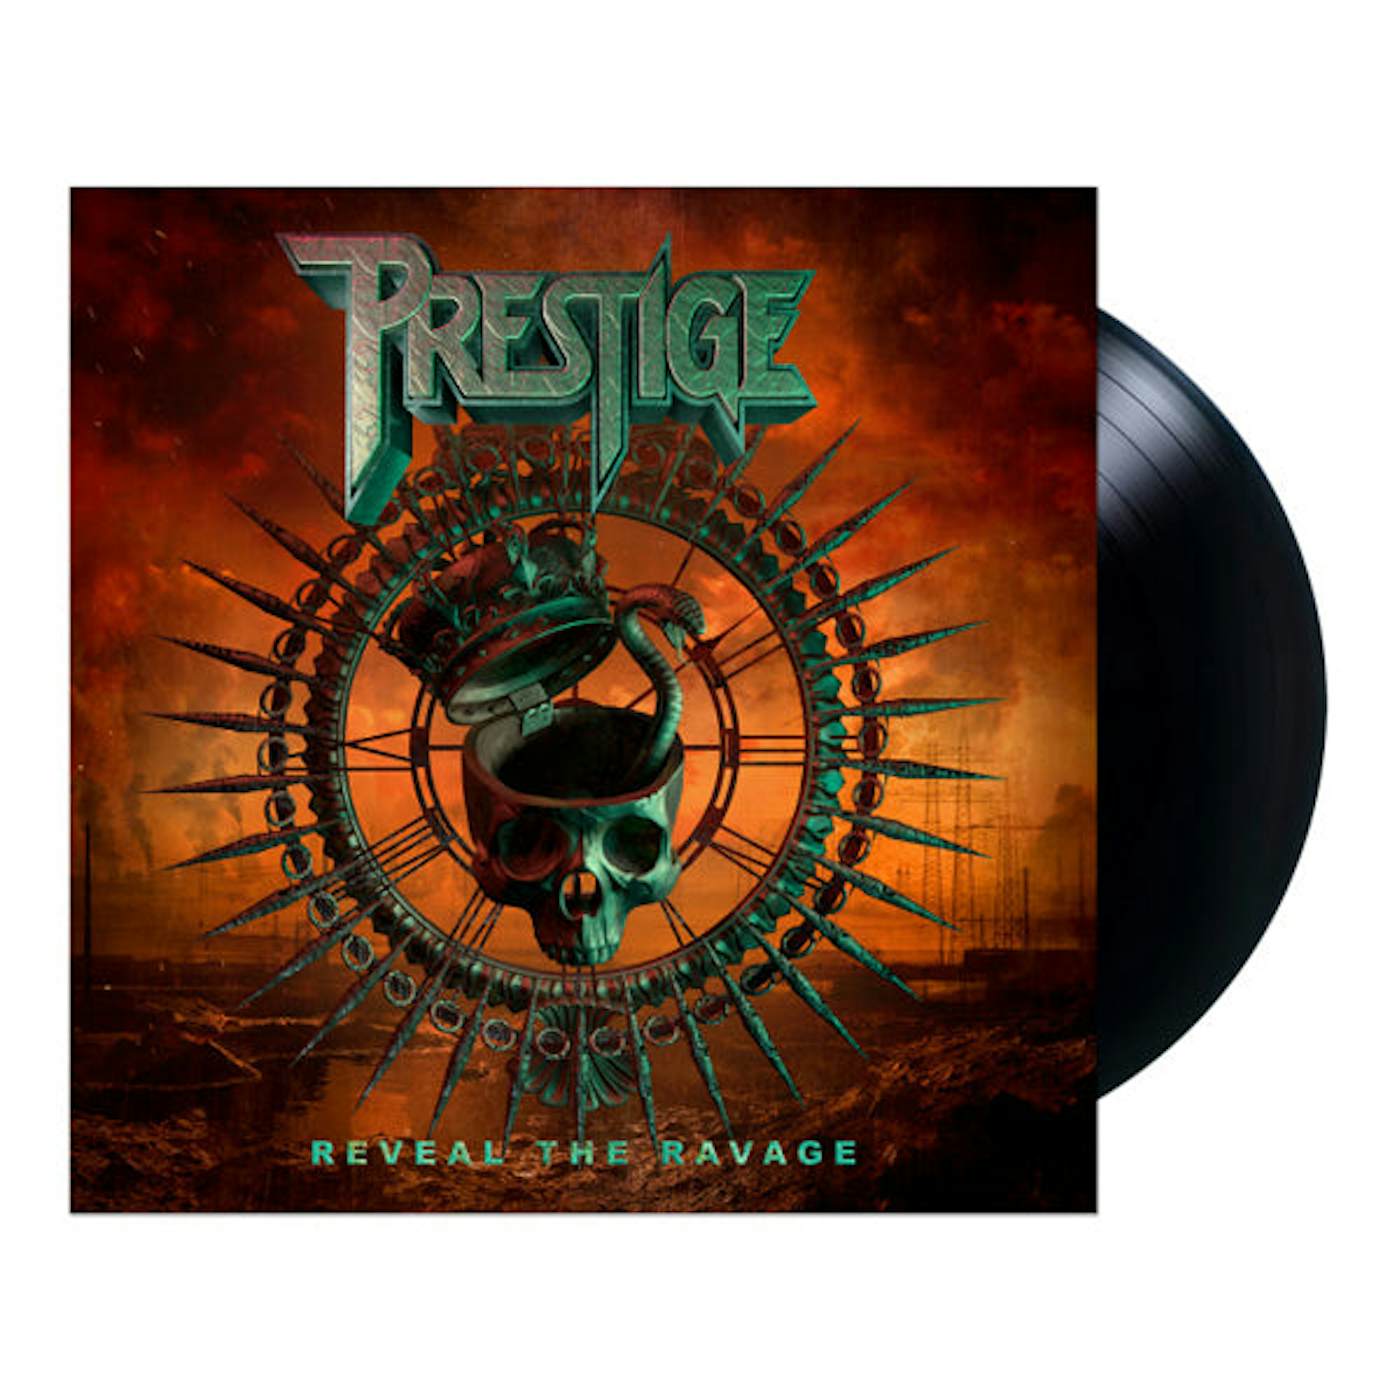 Prestige LP - Reveal The Ravage (Vinyl)